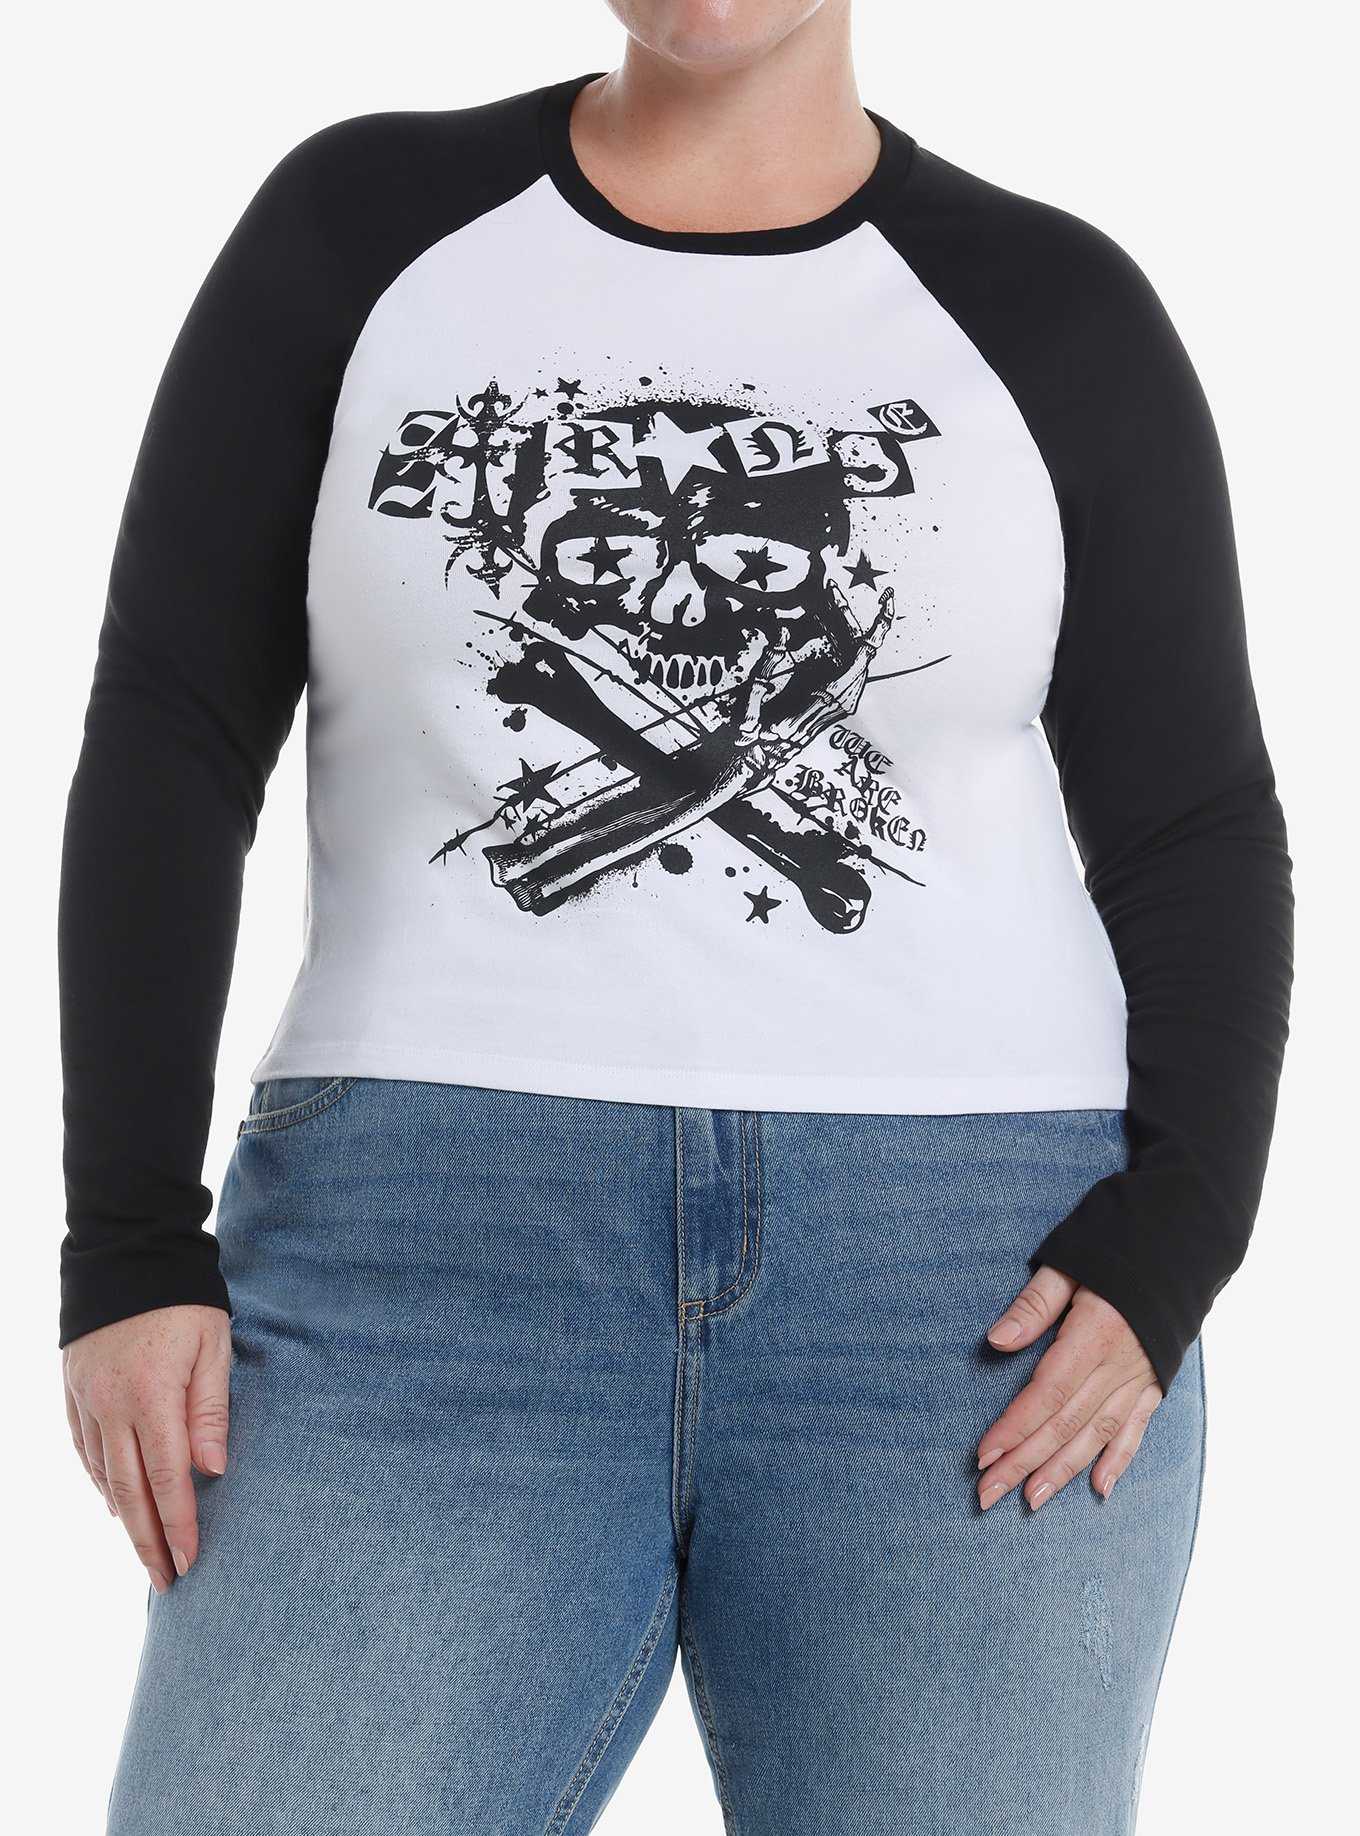 Bad Amy Rockstar Made Weird Gung Reserved shirt, hoodie, sweater, long  sleeve and tank top